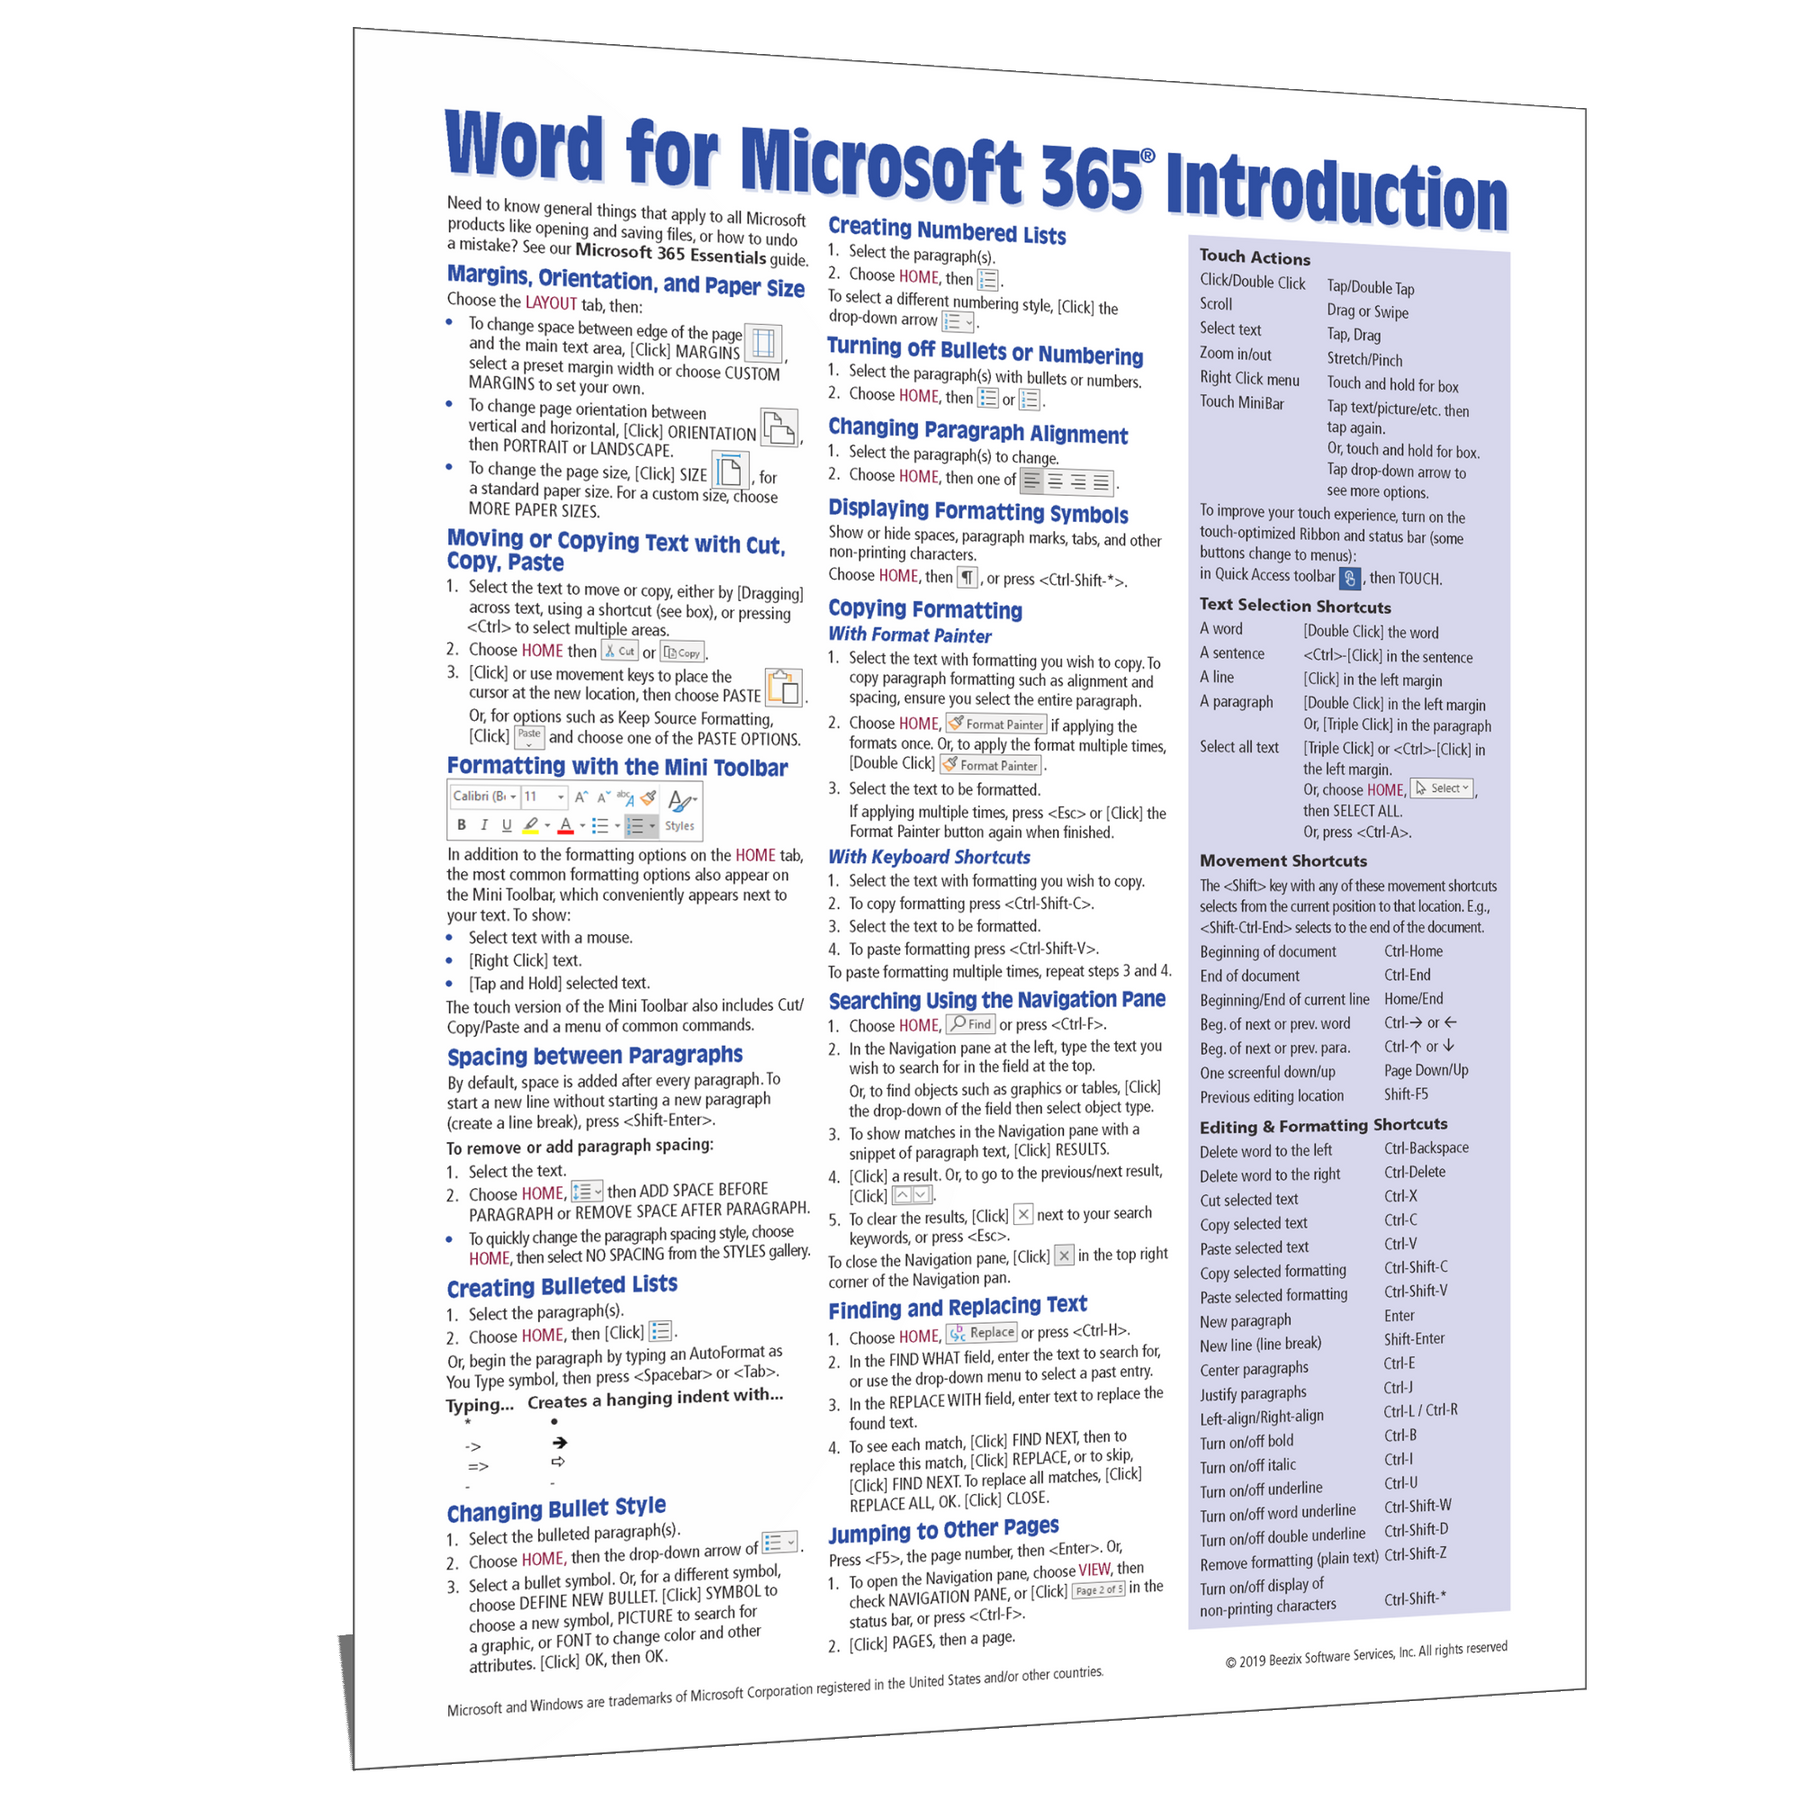 Word for Microsoft 365 cheat sheet